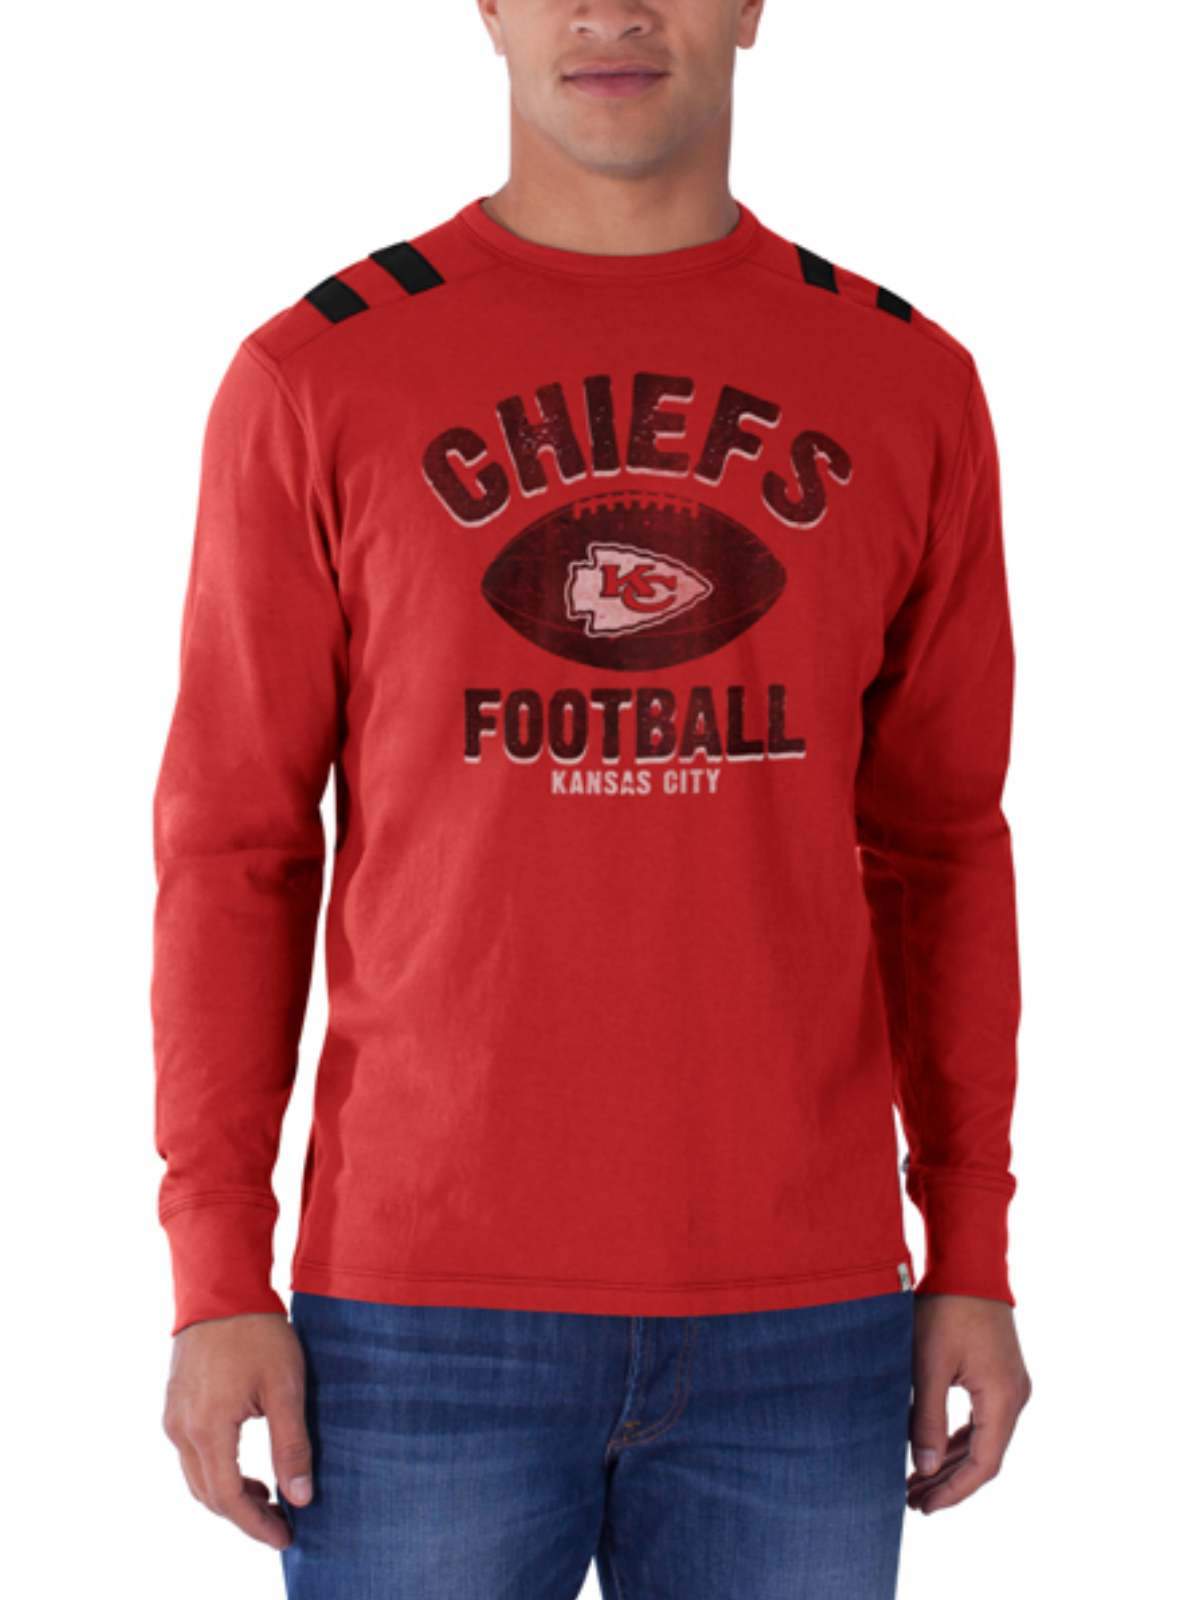 Kansas City Chiefs T-Shirts in Kansas City Chiefs Team Shop 